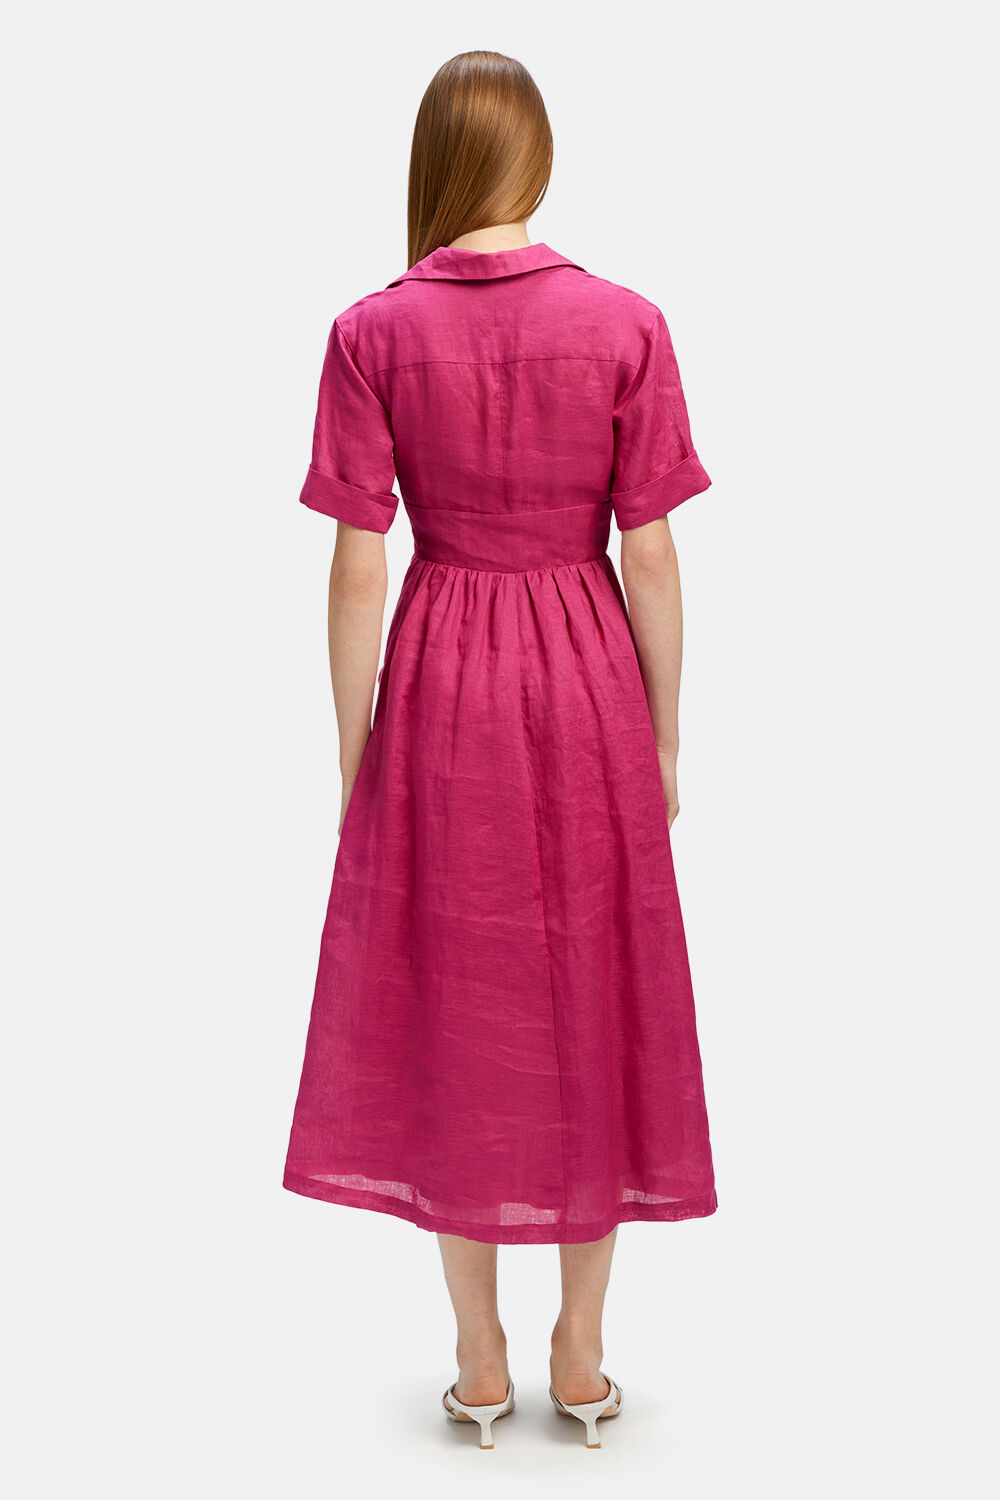 HAZEL LINEN SHIRT DRESS in colour TOMATO PUREE